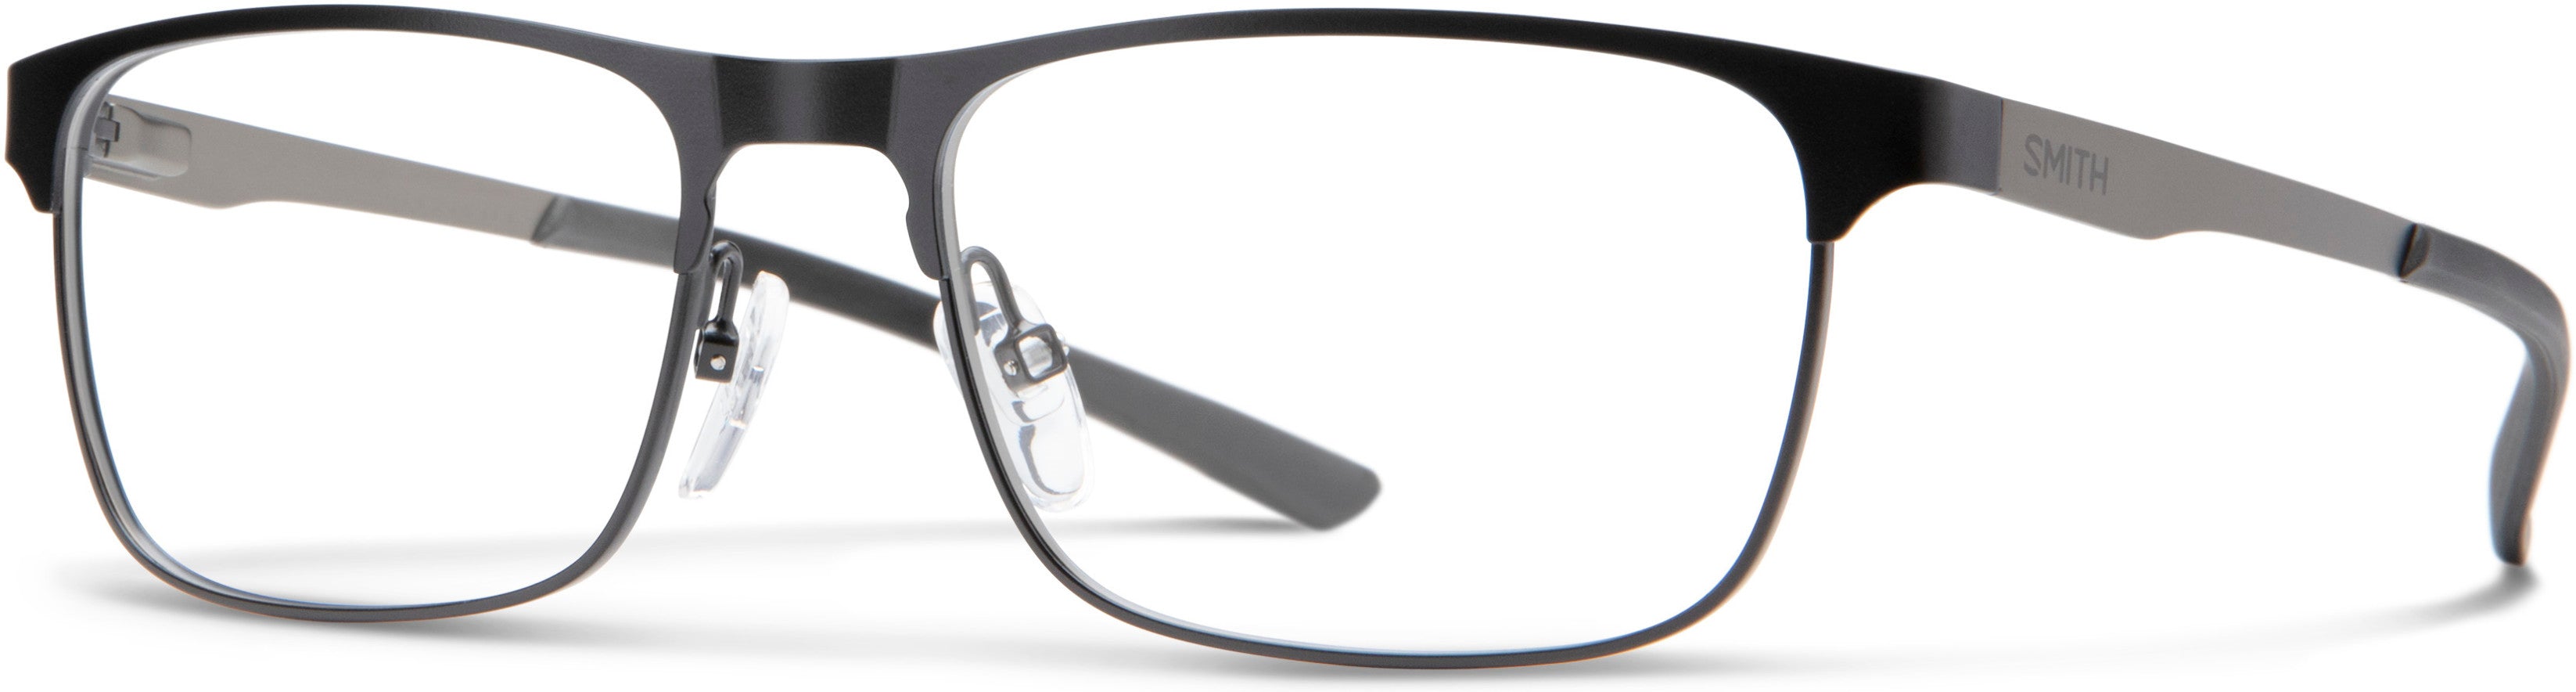 Smith Sprocket Rectangular Eyeglasses 0003-0003  Matte Black (00 Demo Lens)